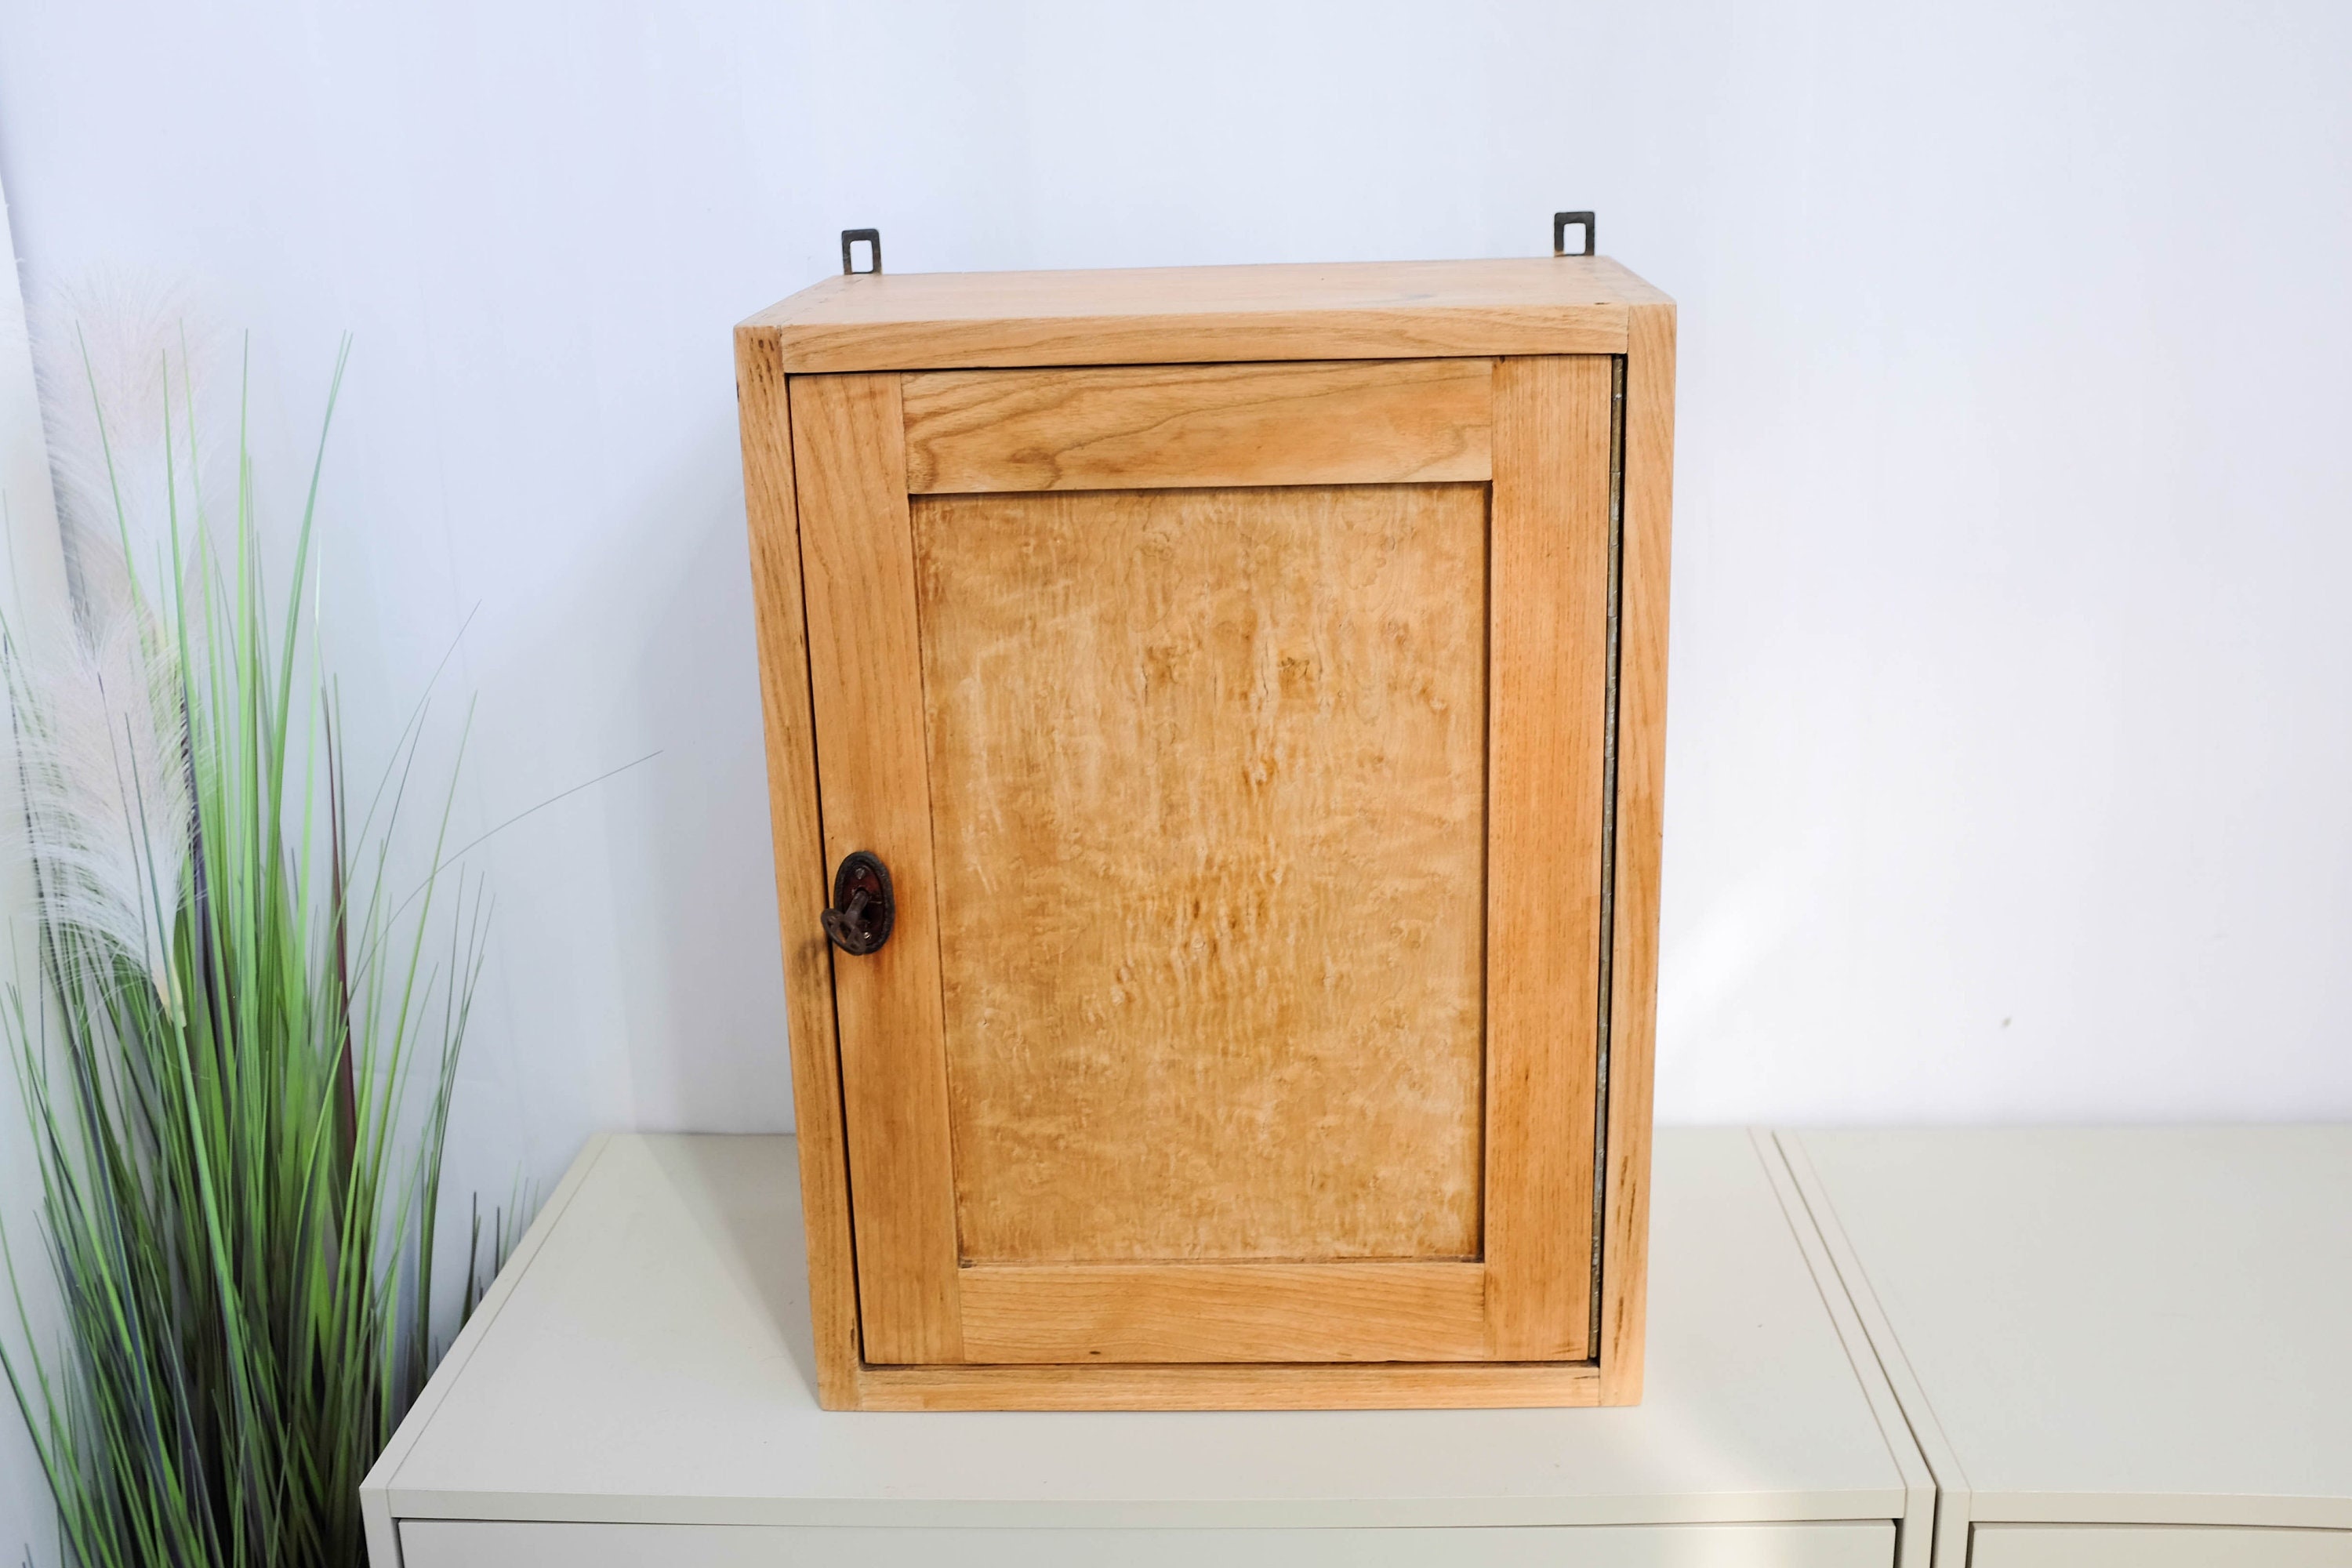 22 x 3 x 0.5 Oak Wood Medicine Cabinet Shelf Replacement - 1PCS